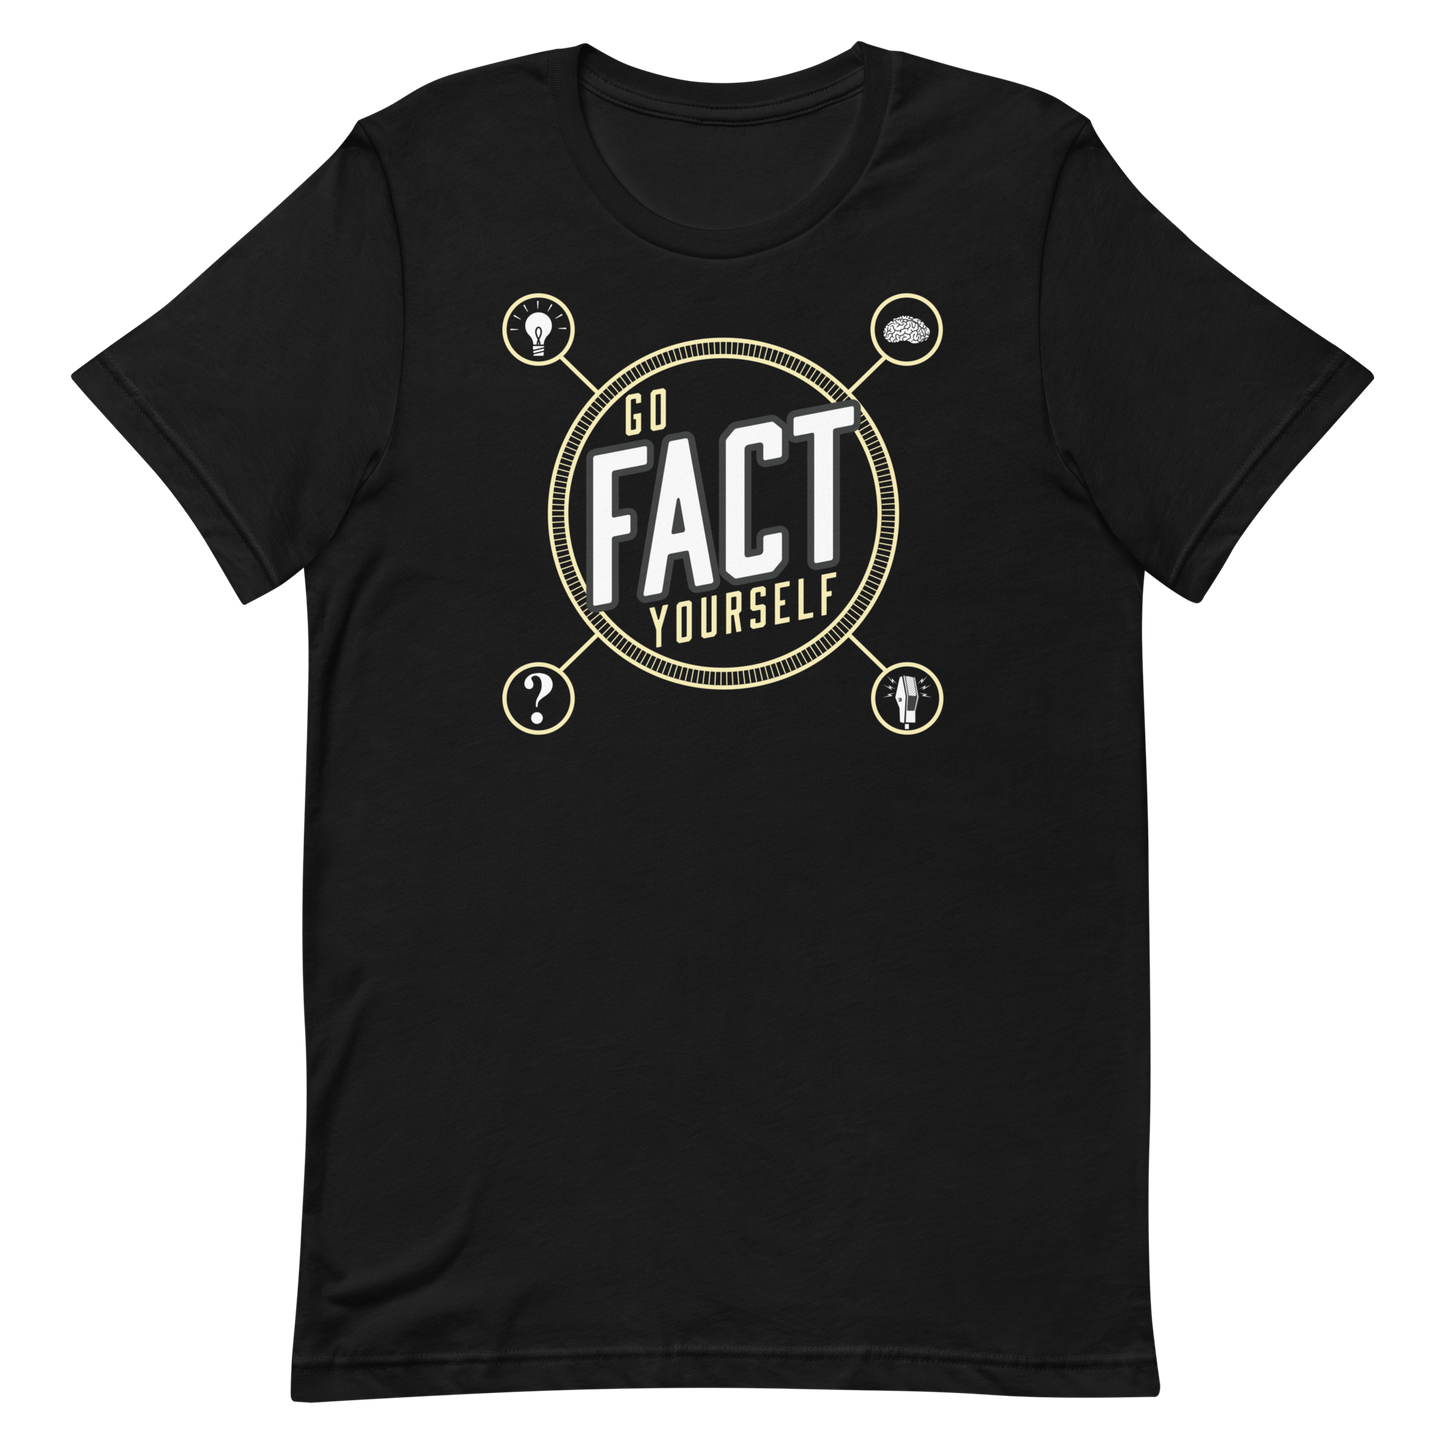 Go Fact Yourself logo T-shirt